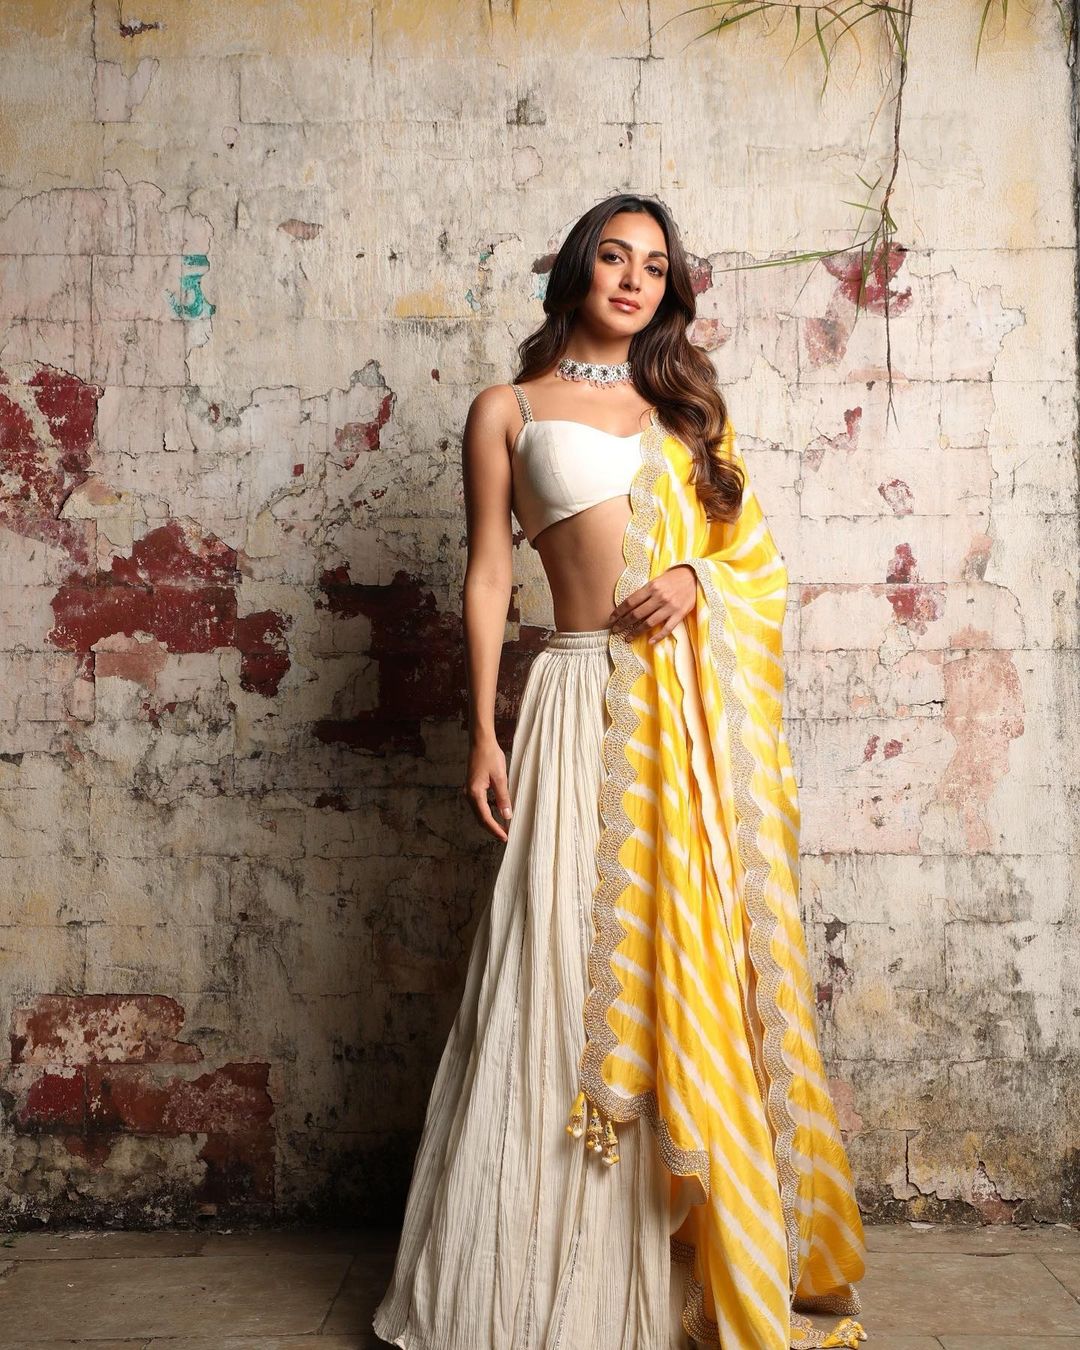 Kiara Advani looks stunning in the white lehenga with the yellow dupatta.